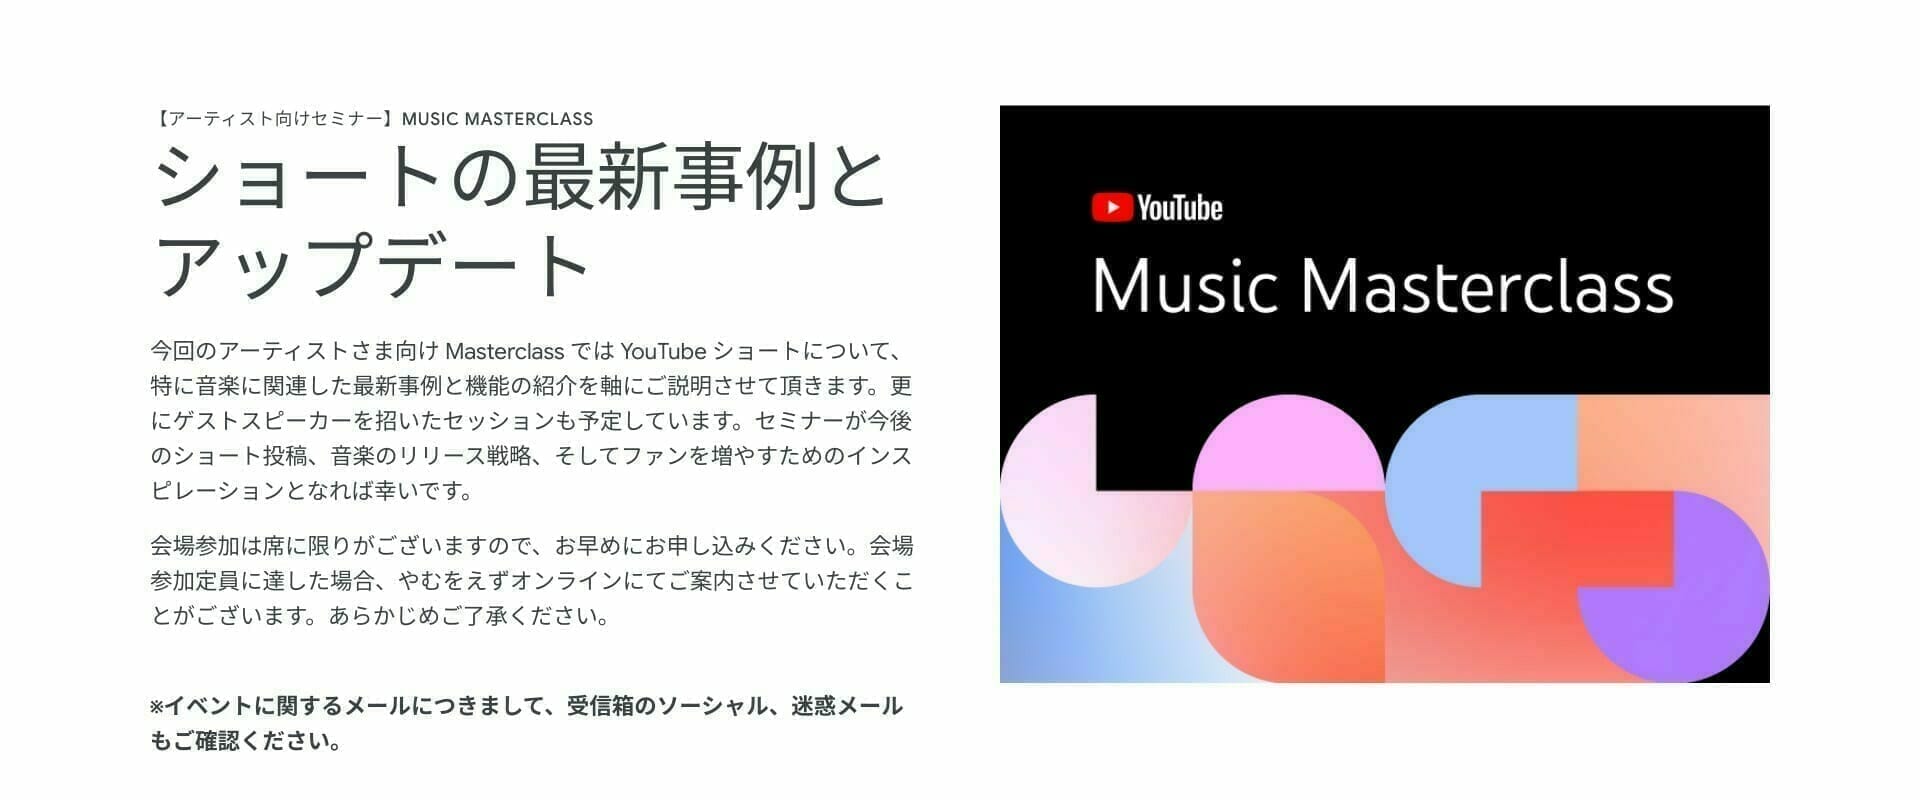 [YouTube] 【アーティスト向けセミナー】MUSIC MASTERCLASS